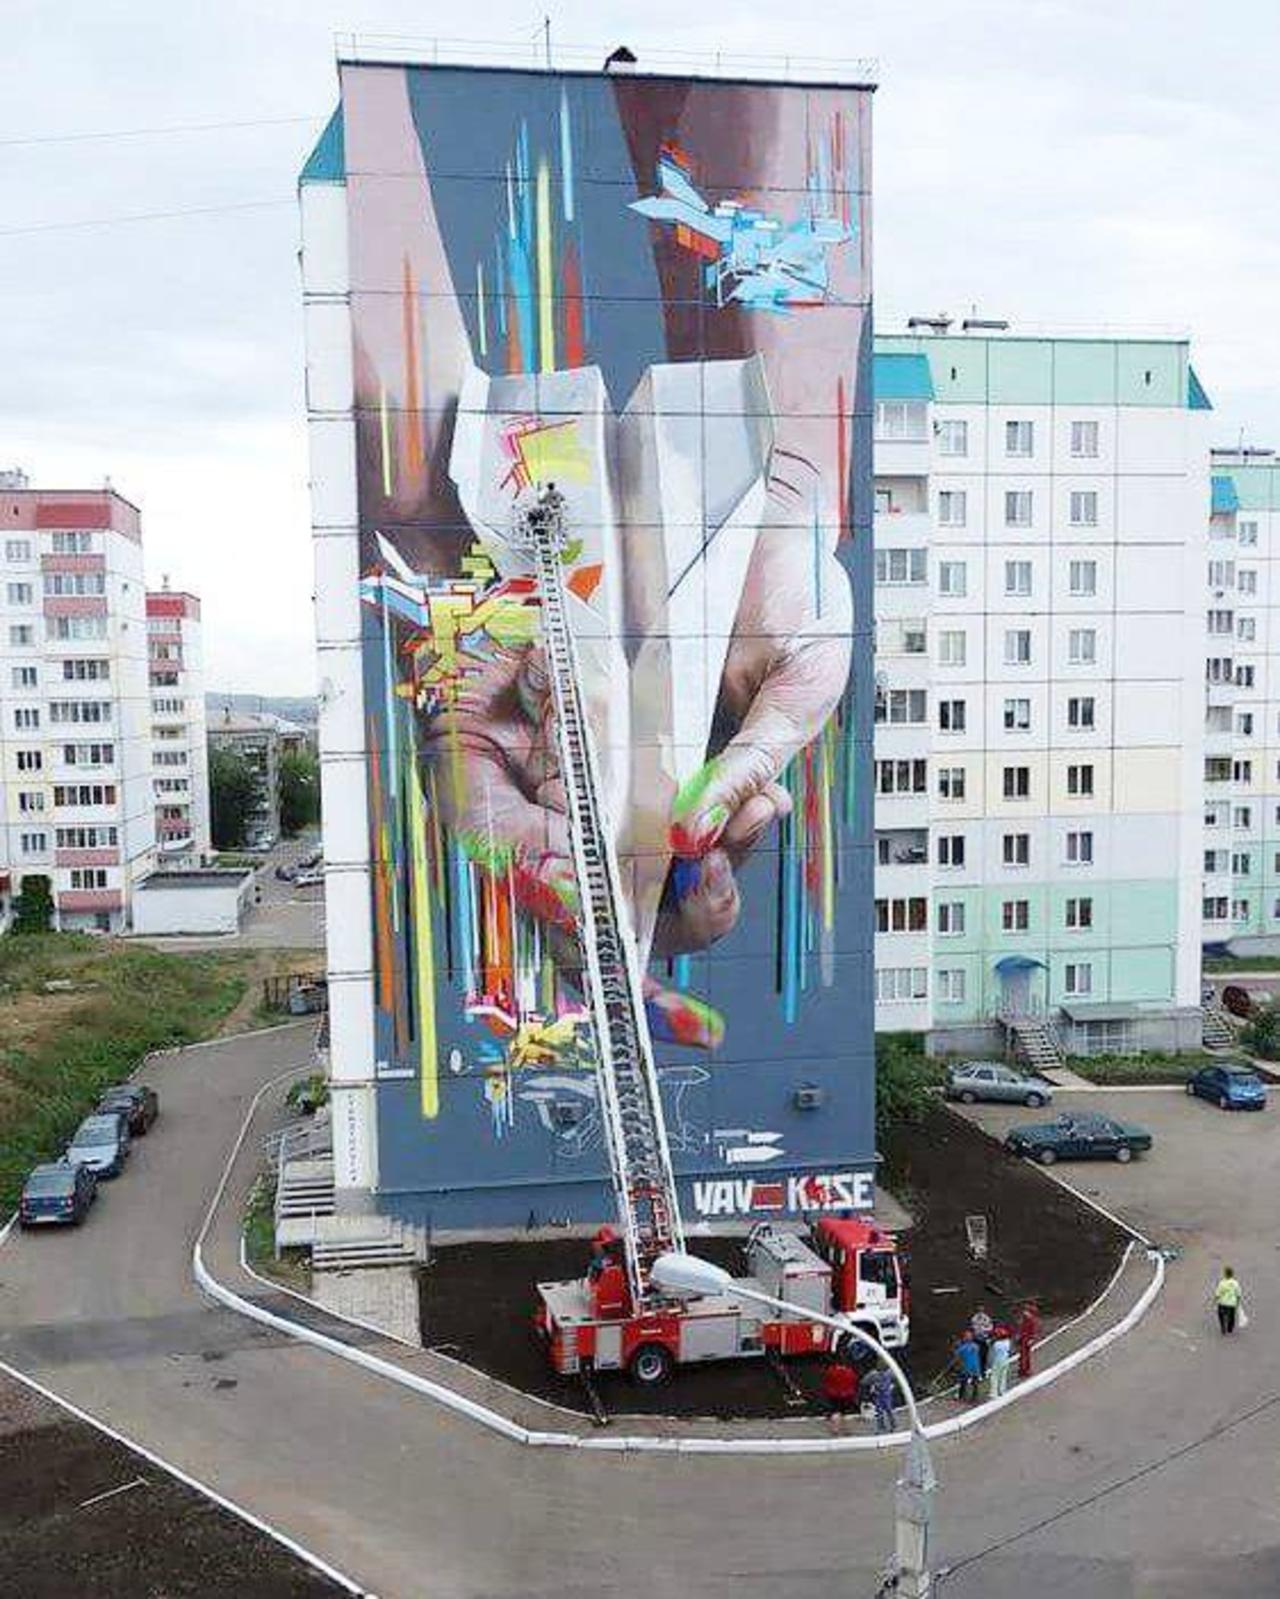 Found this cool photo, not mine Amazing#streetart #graffiti #mural #firetruck #wow123 http://t.co/DIB4zUajko